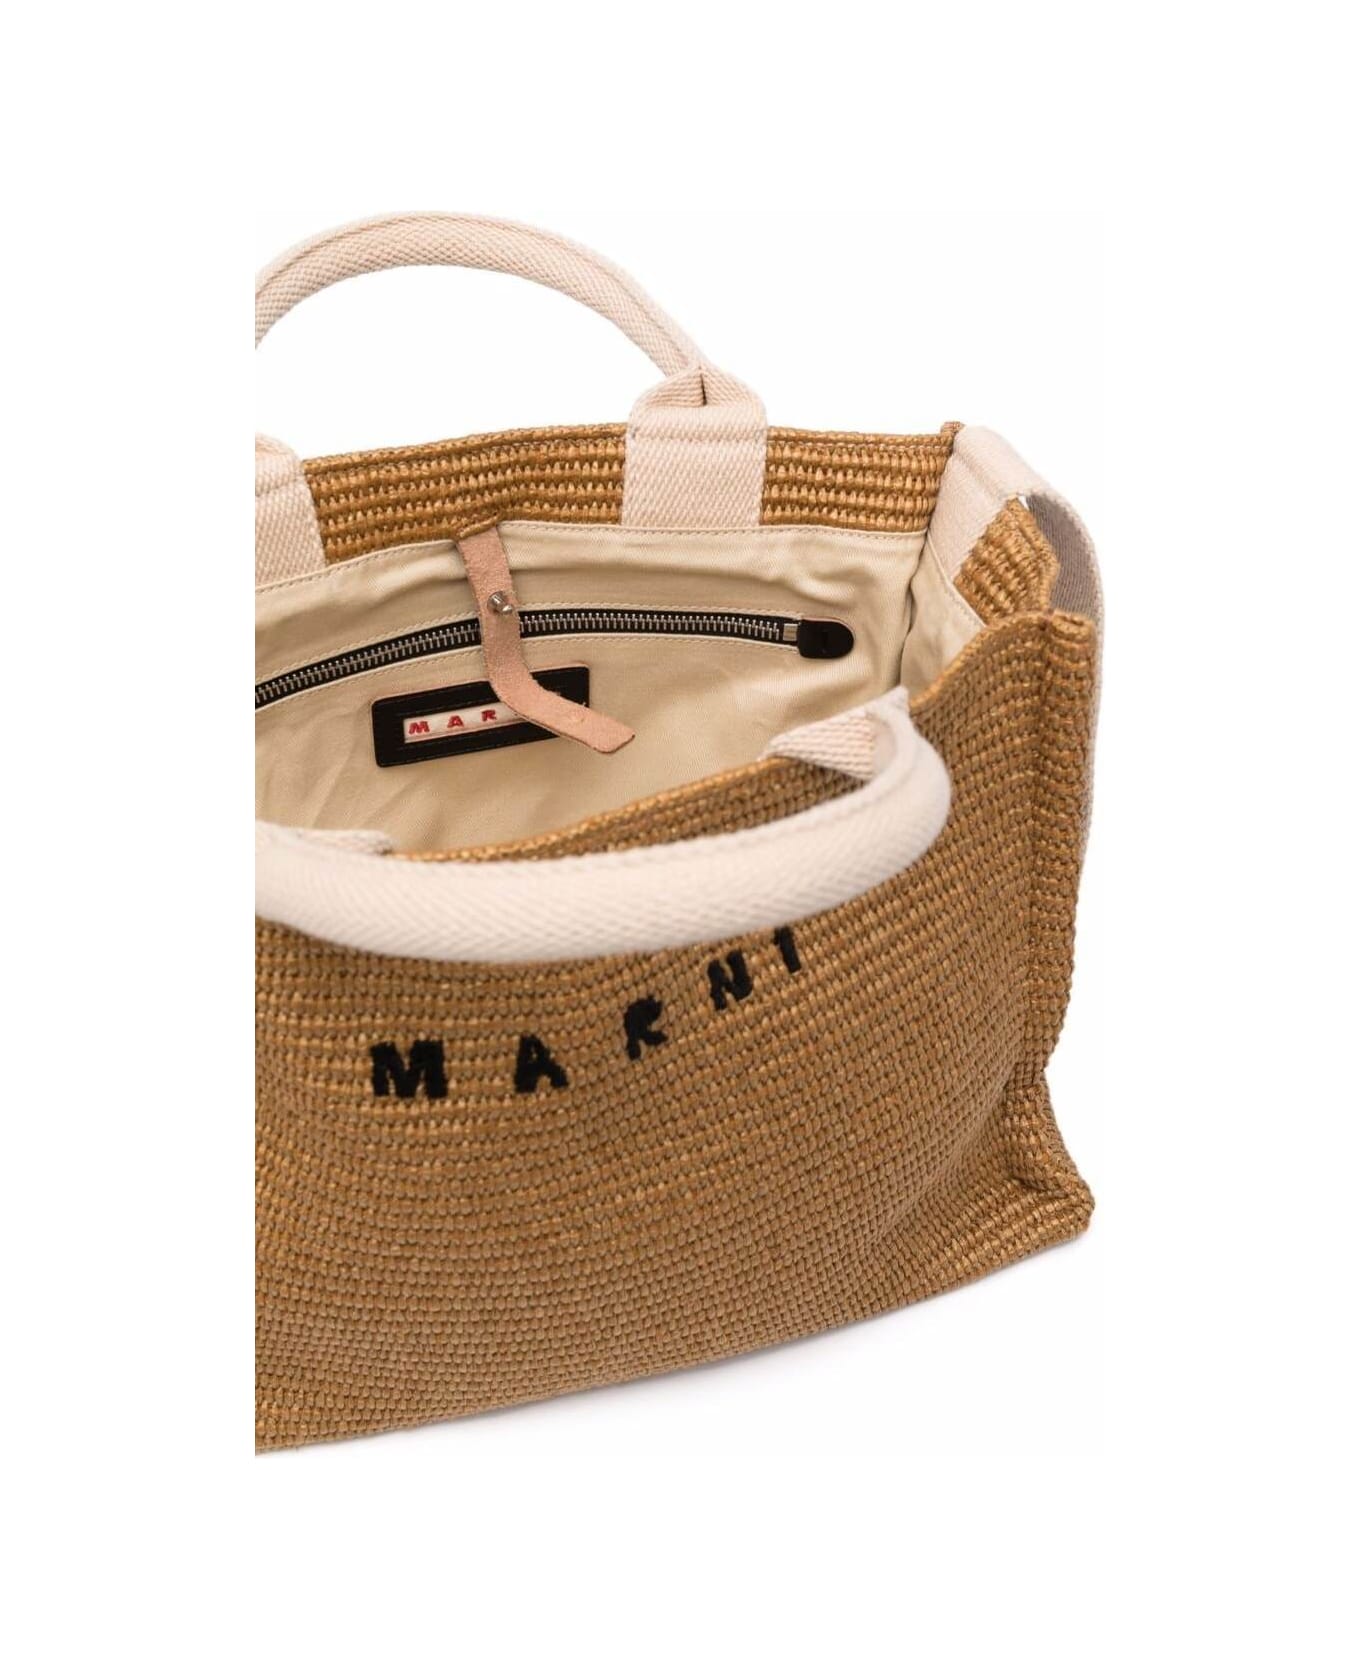 Marni Woman's Beige Raffia Shopping Bag With Logo Print - Beige トートバッグ